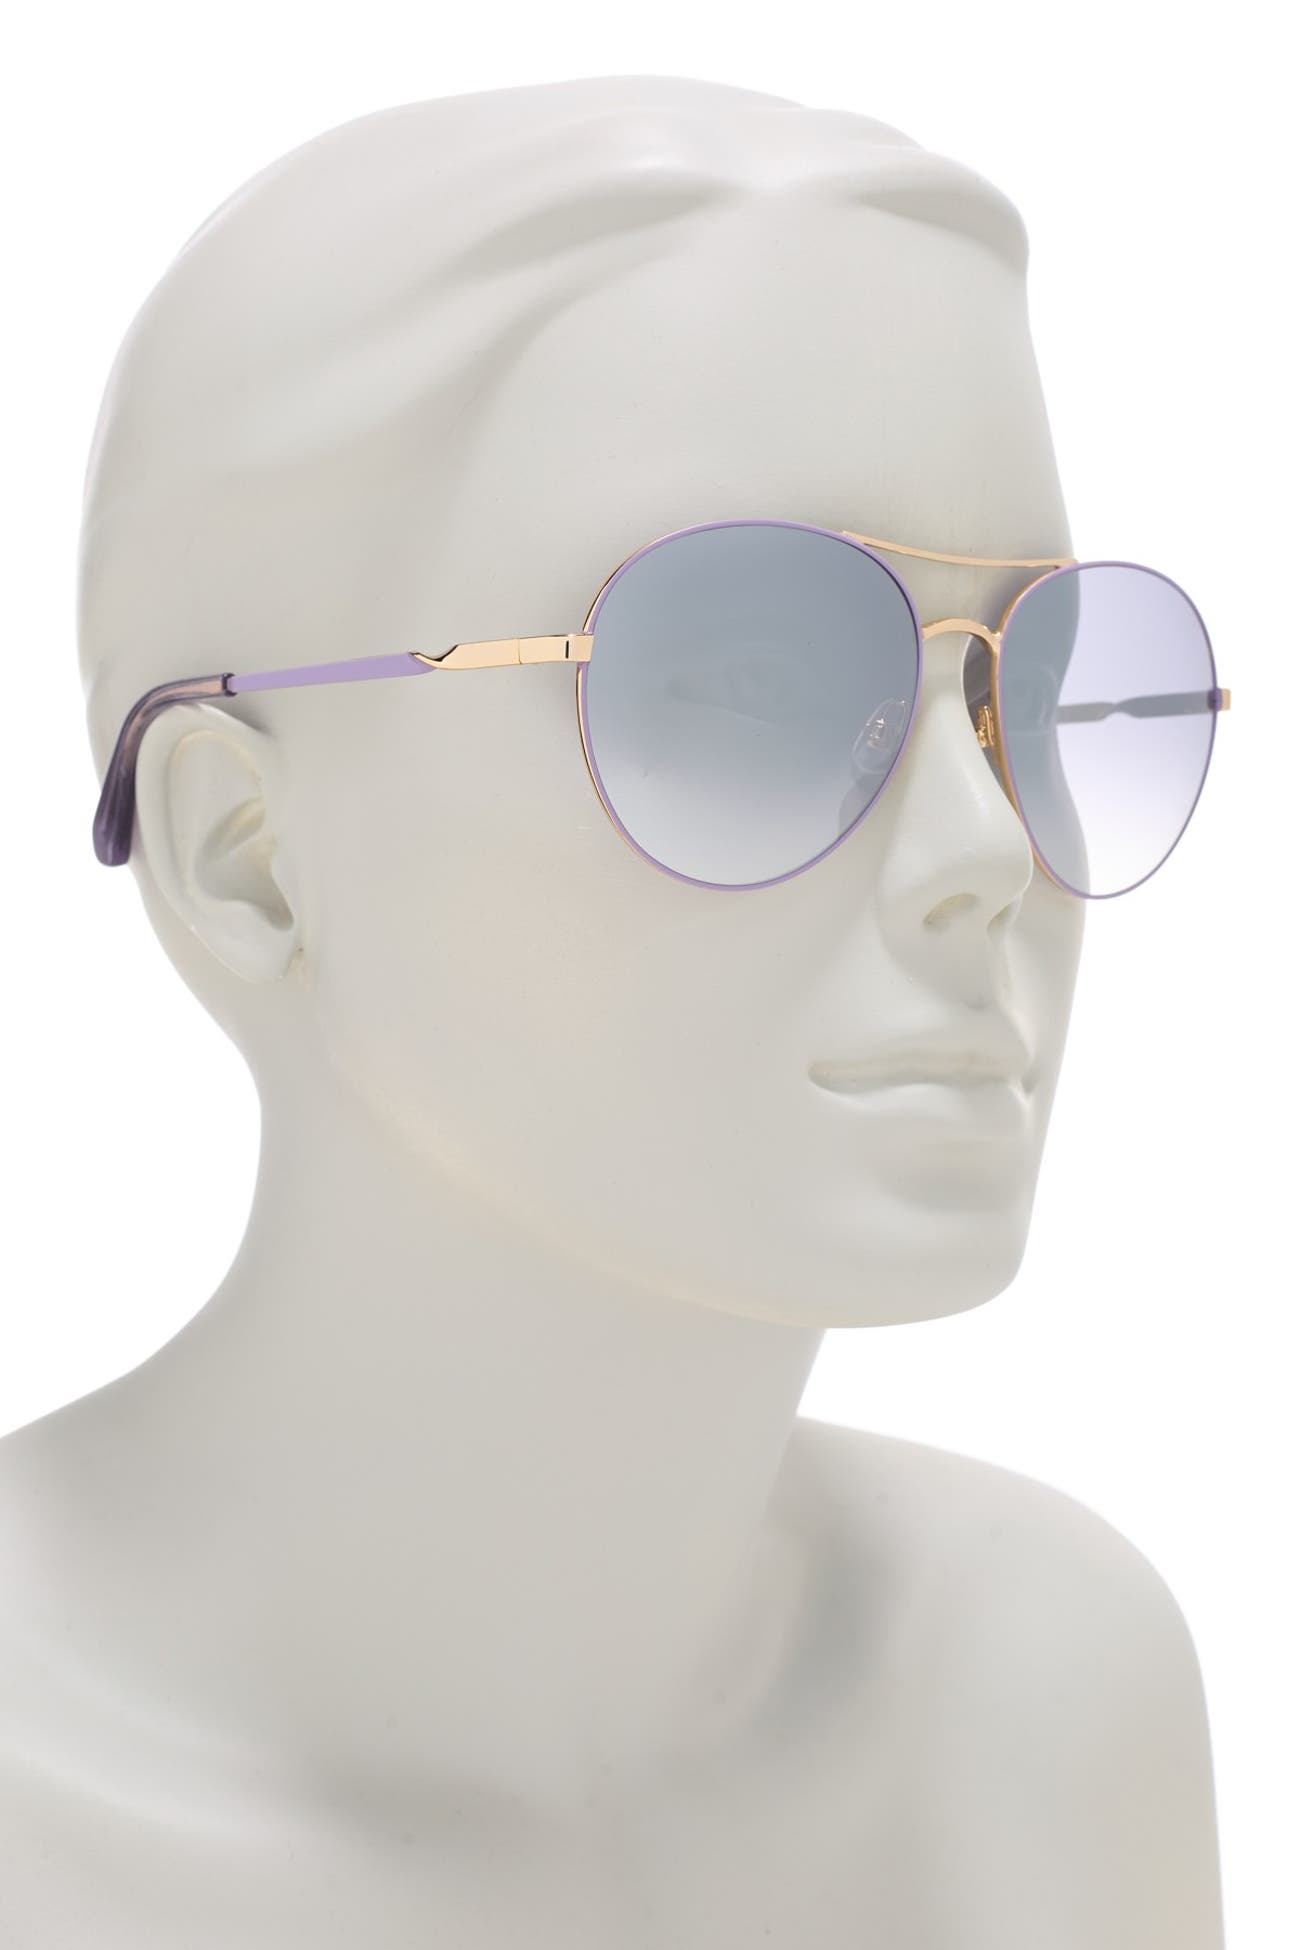 kate spade new york | joshelle 60mm polarized aviator sunglasses ...